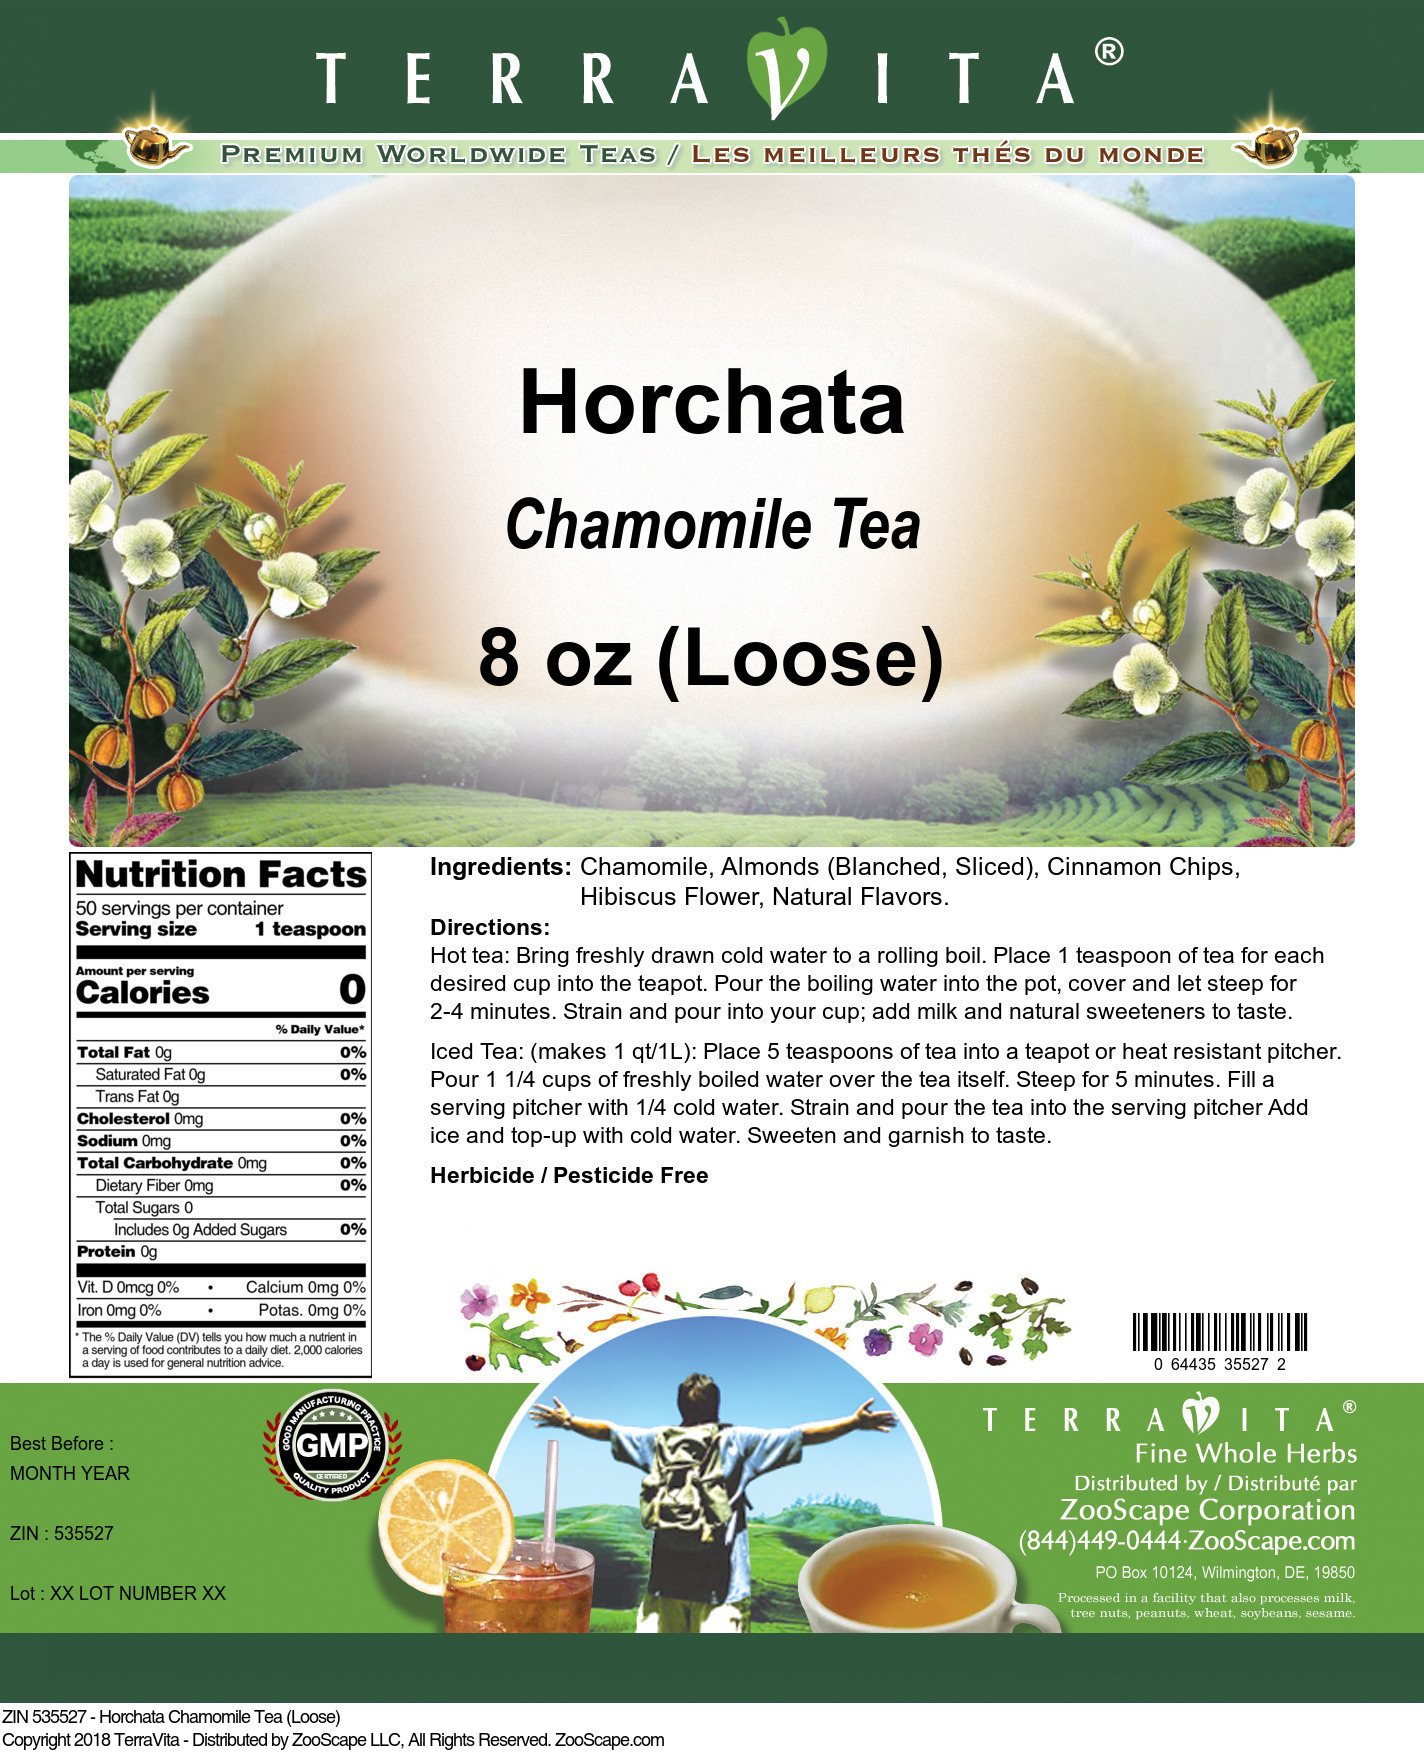 Horchata Chamomile Tea (Loose) - Label